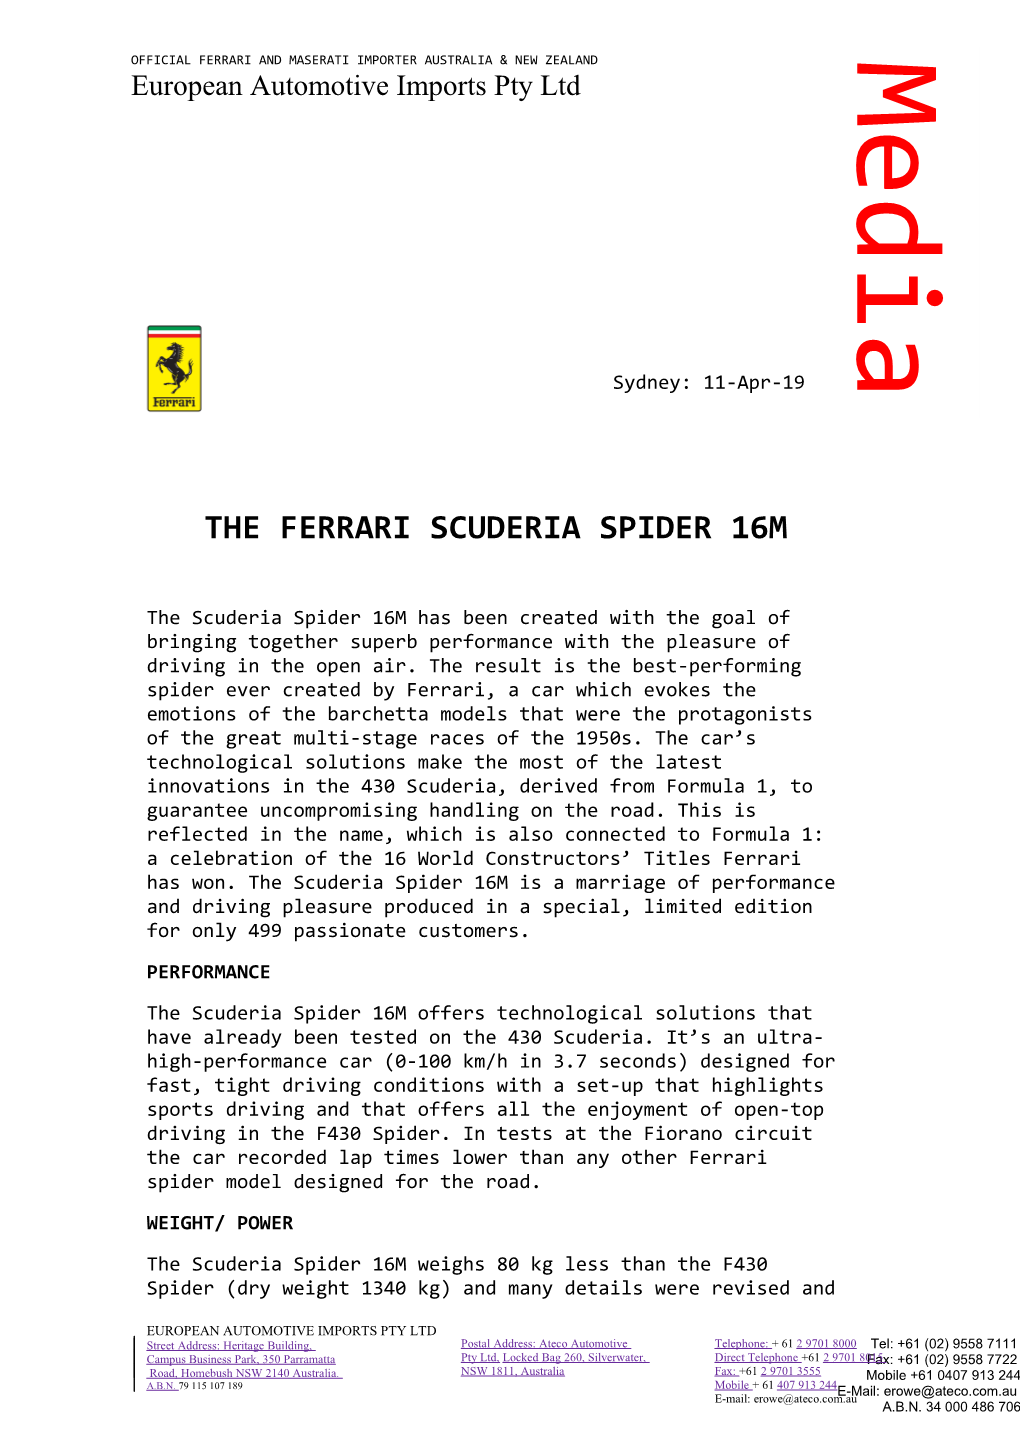 The Ferrari Scuderia Spider 16M